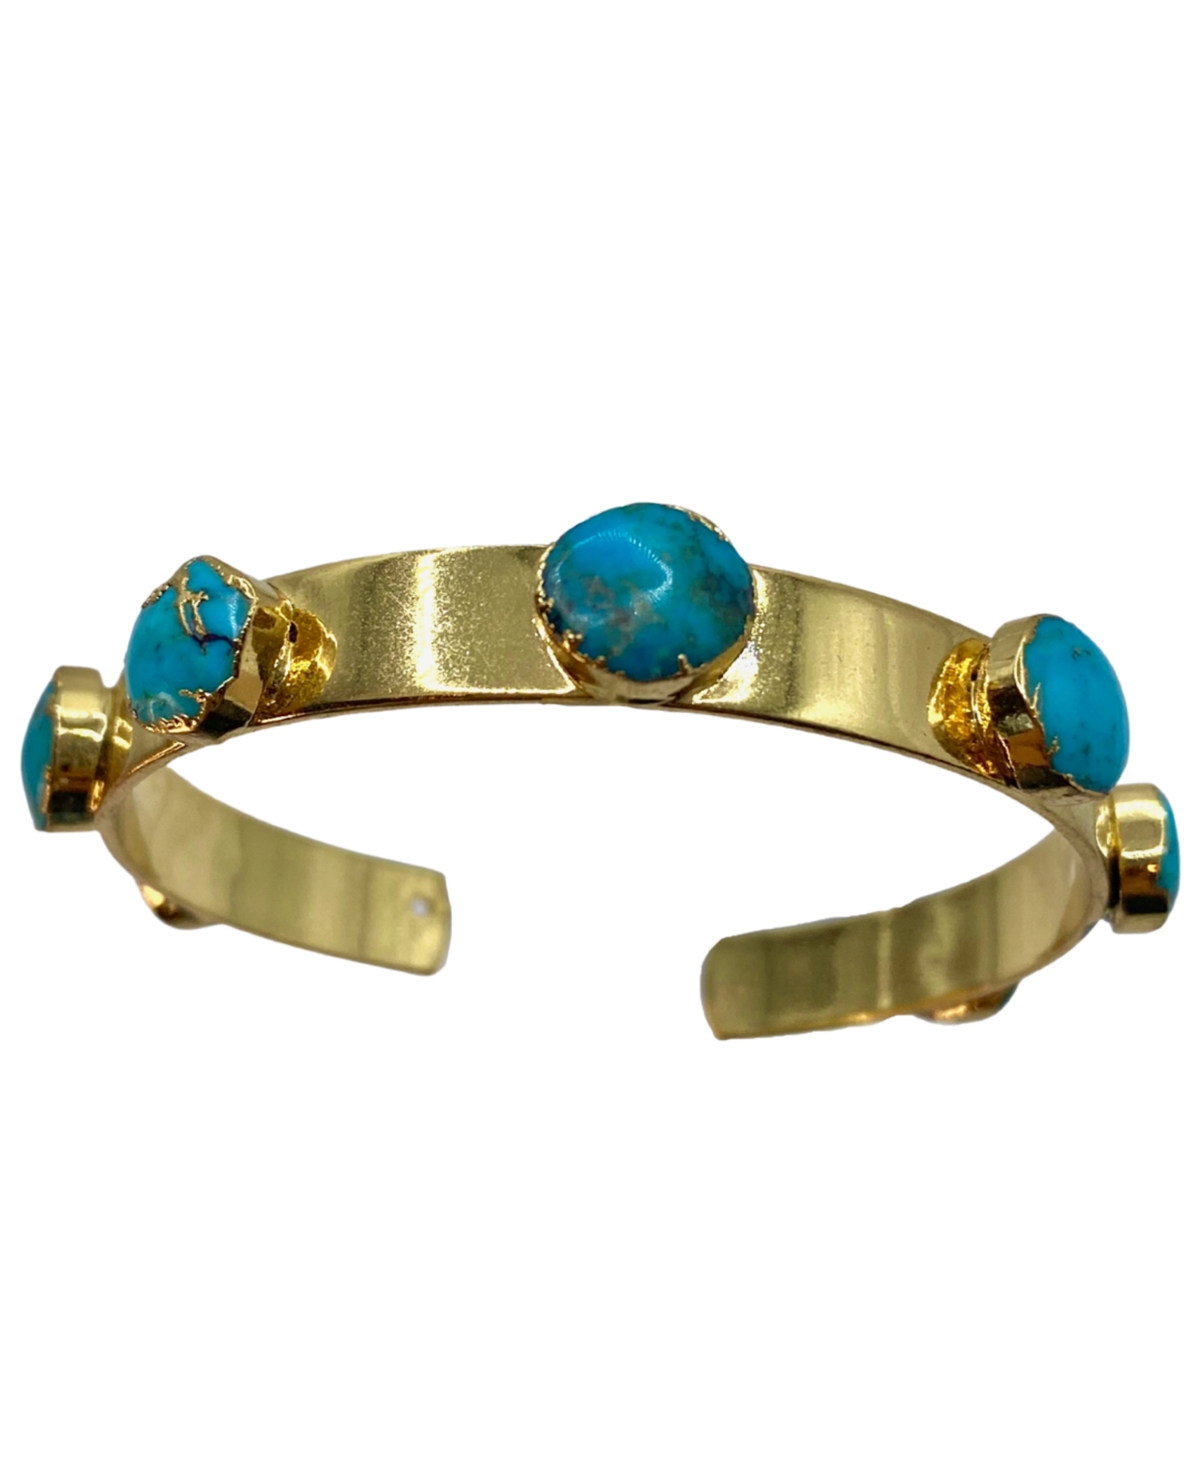 Women's Galapagos Cuff Bracelet - Turquoise